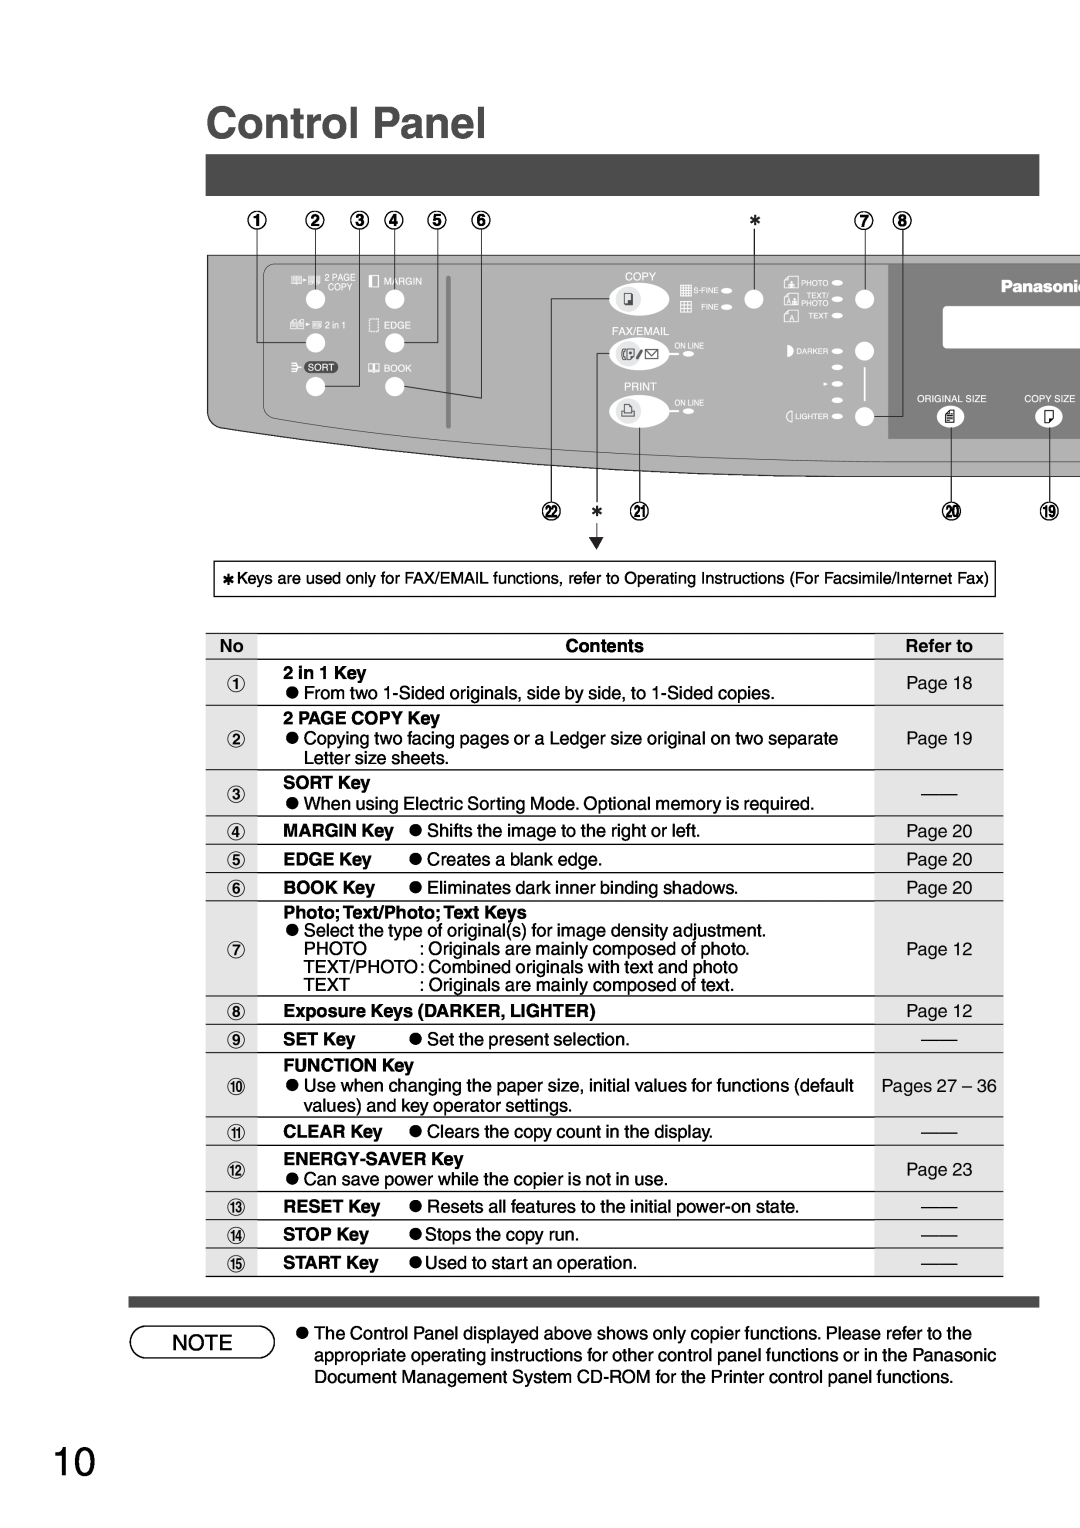 Panasonic DP-1810F manual Control Panel 